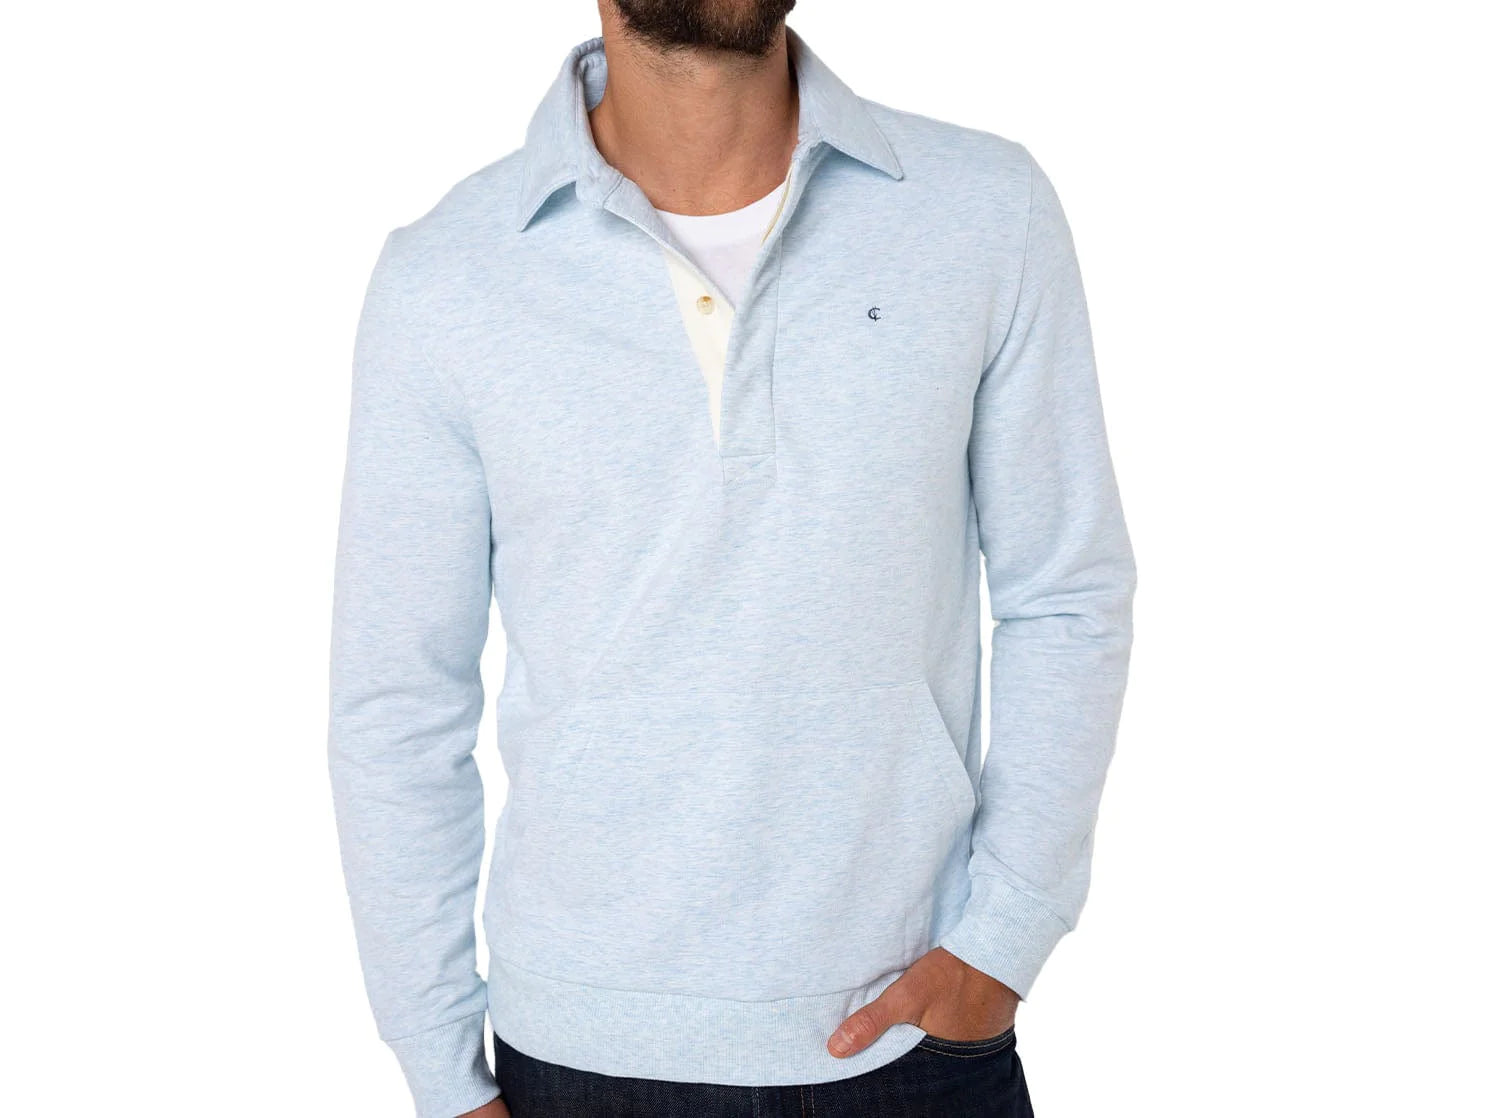 Criquet Collared Sweatshirt